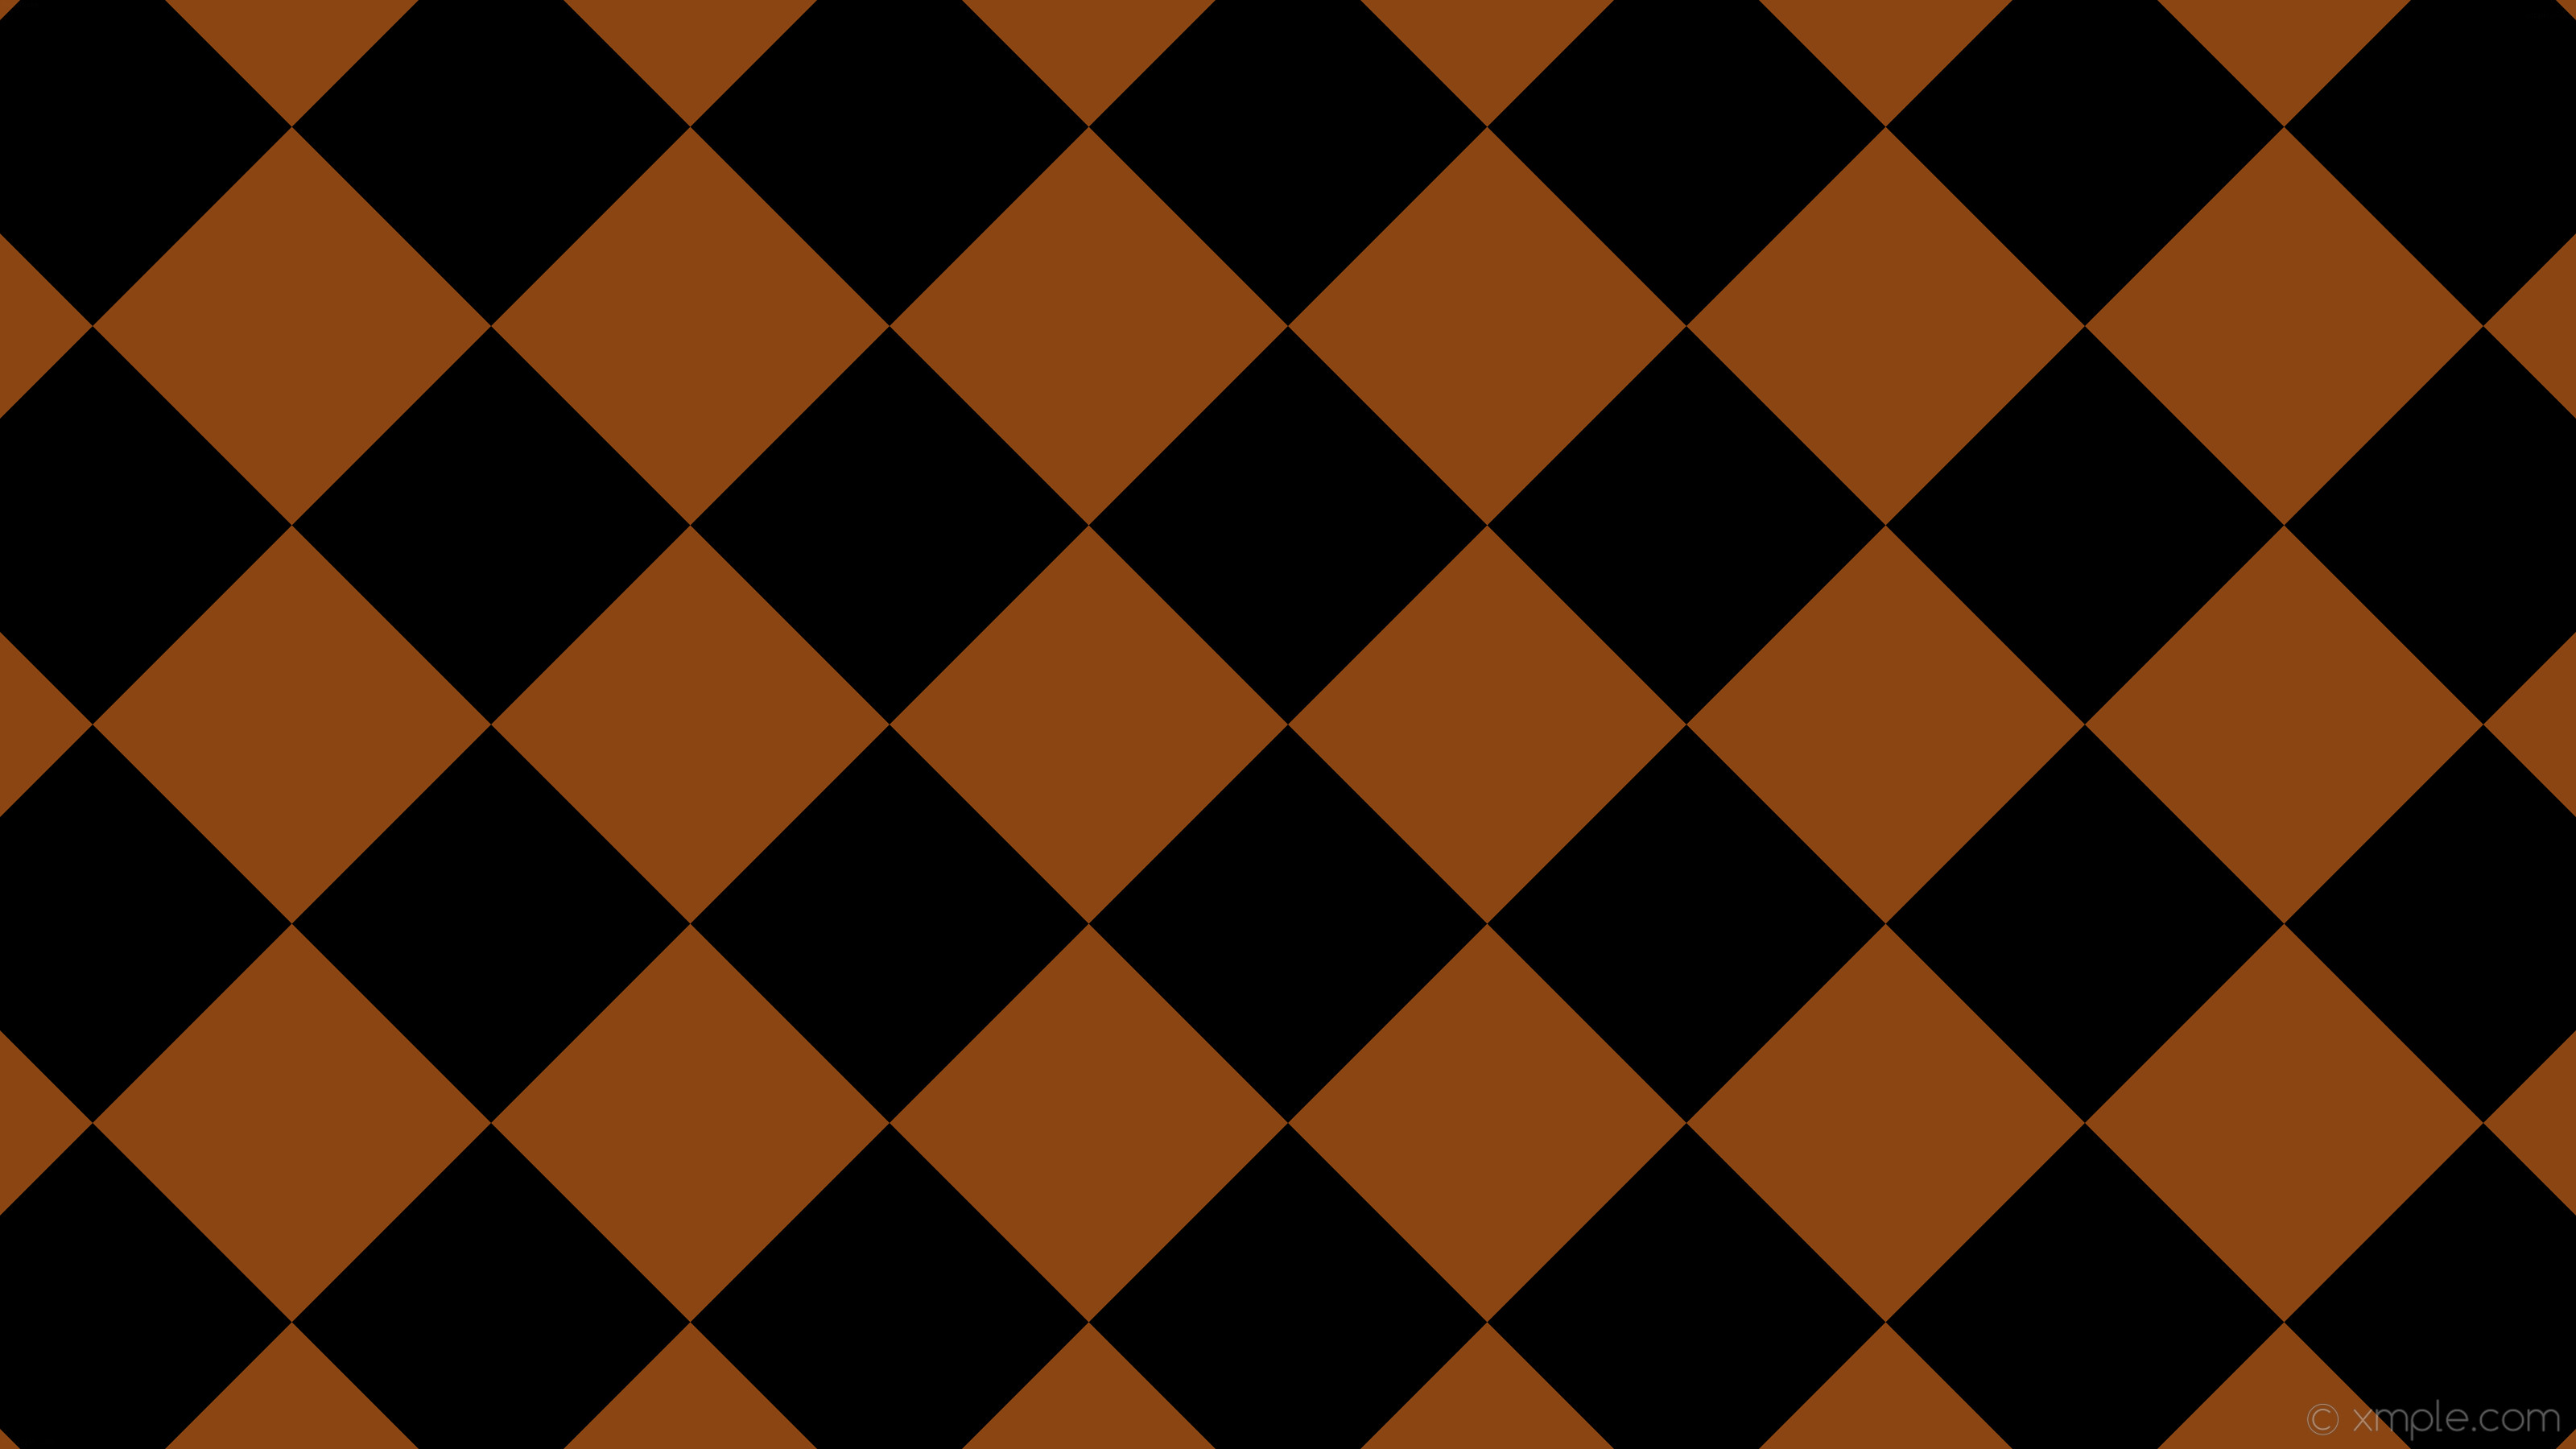 3200x1800 Wallpaper Squares Wallpaper Checkered Brown Squares Black 8b4513 000000  Diagonal